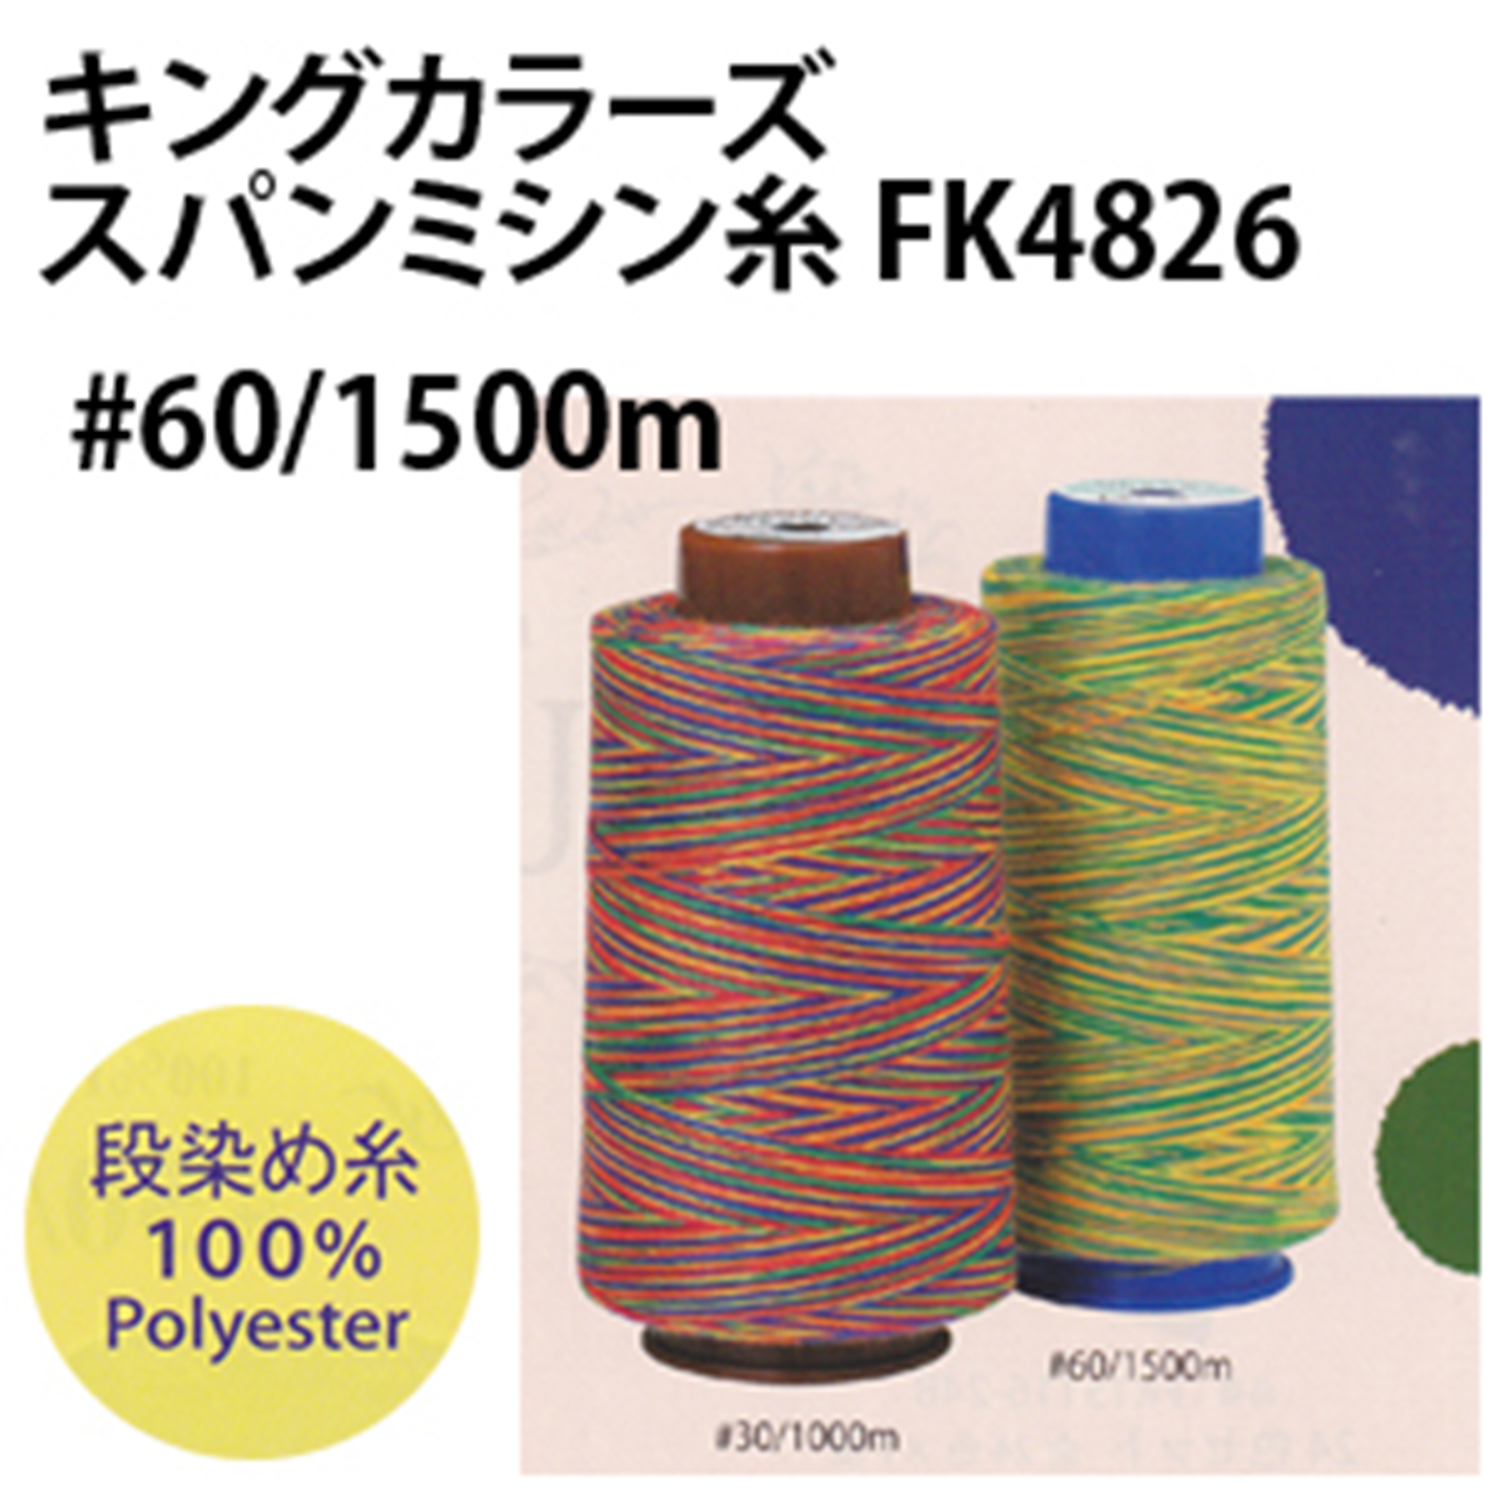 FK4826 King Colors Spun Machine Thread 60/1500m  (pcs)